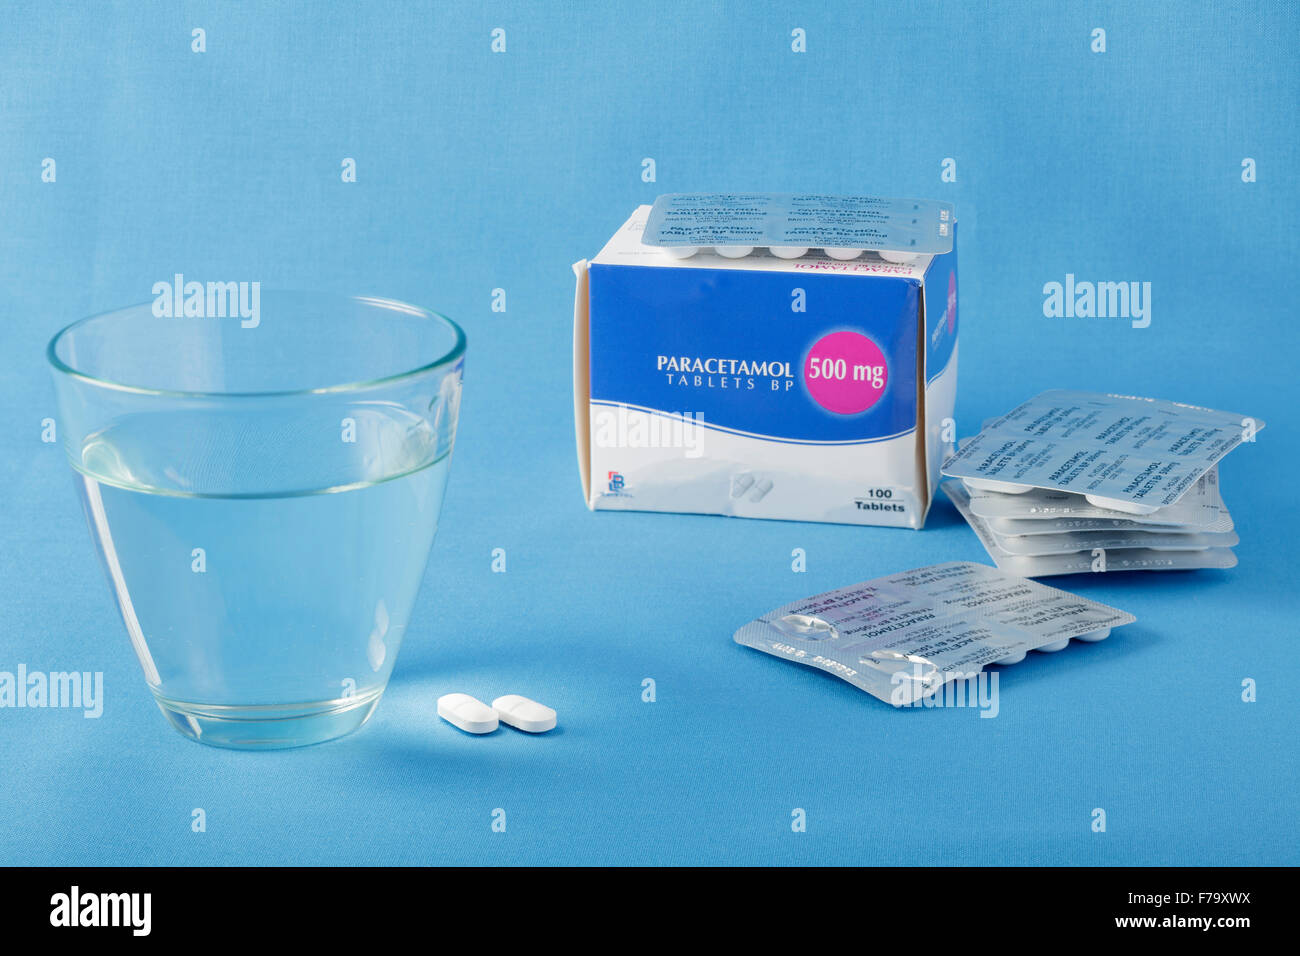 Paracetamol tablets Stock Photo